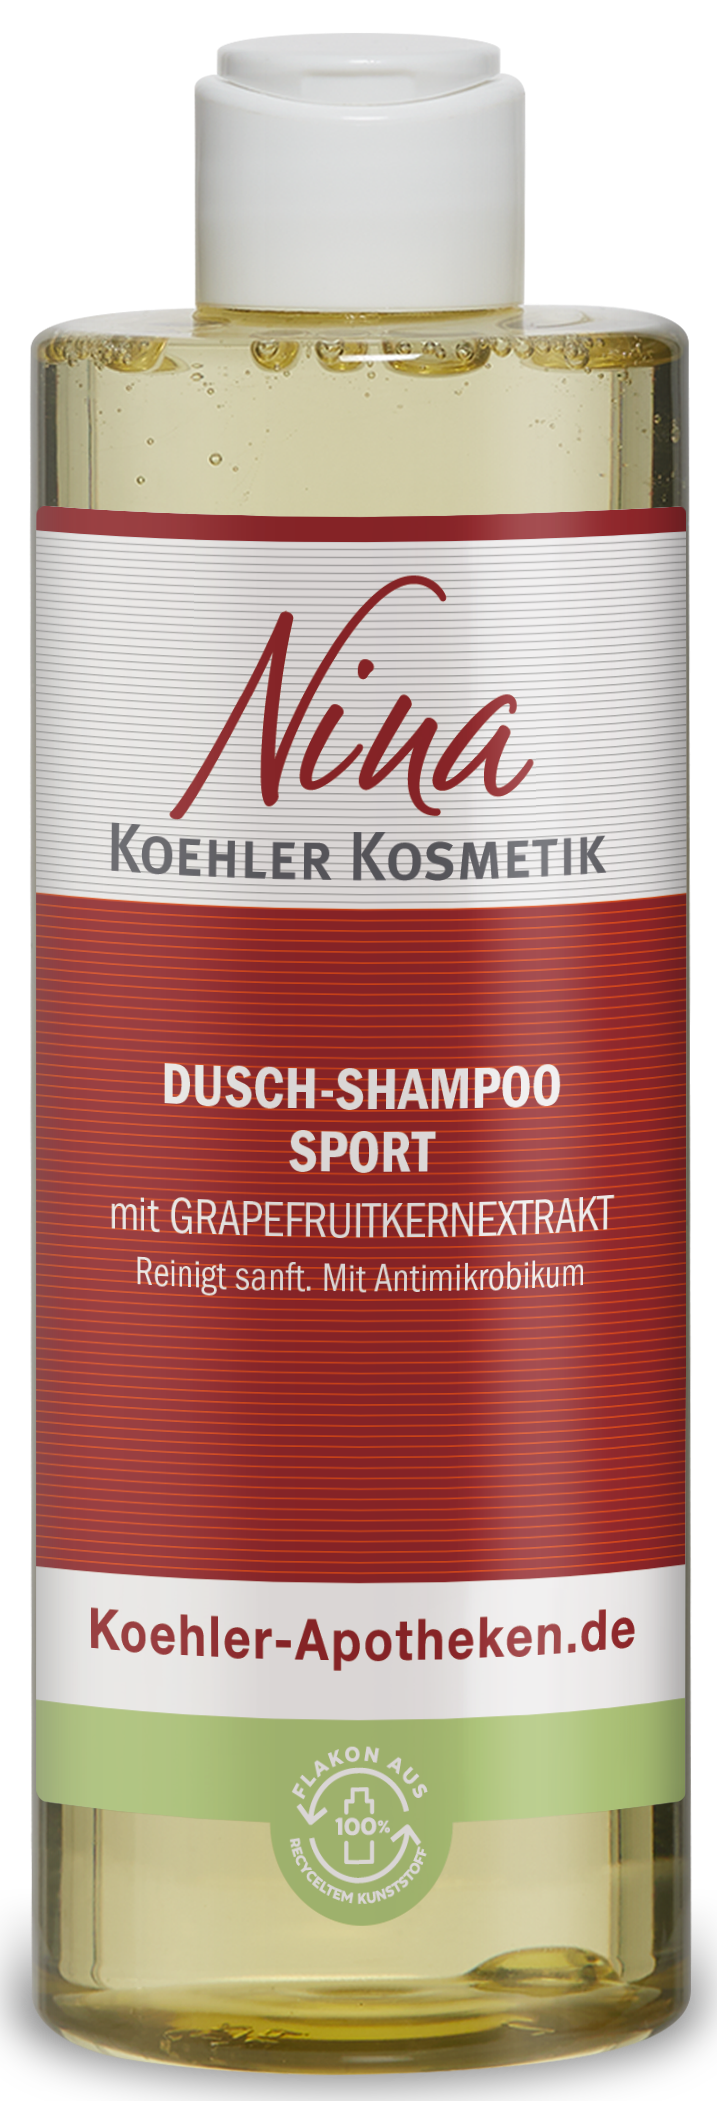 Nina Koehler Kosmetik Duschshampoo Sport